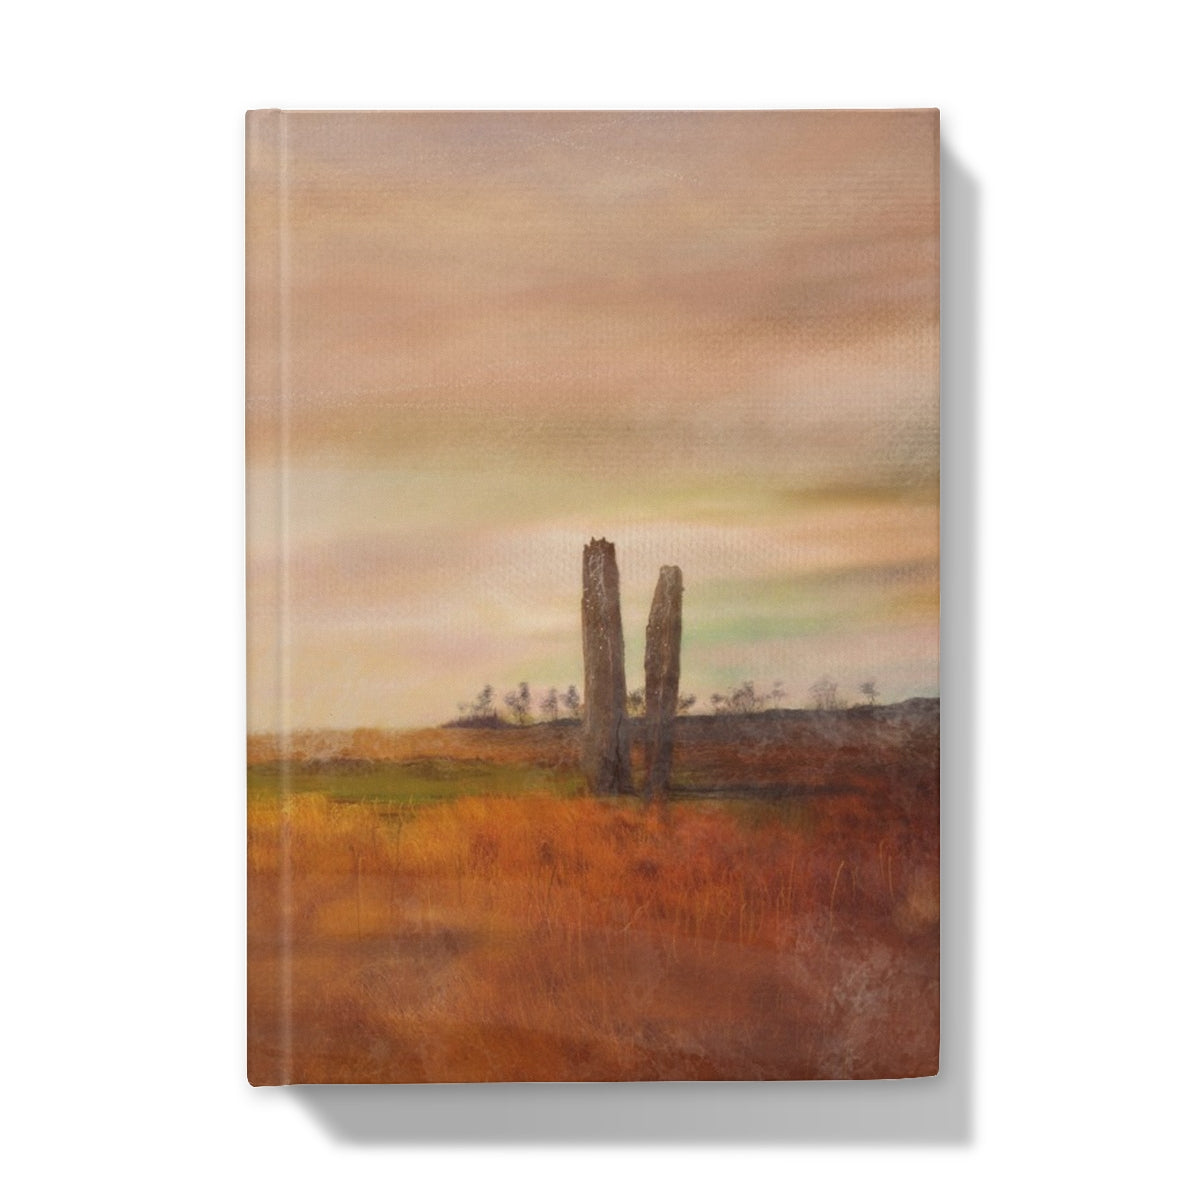 Machrie Moor Arran Art Gifts Hardback Journal-Journals & Notebooks-Arran Art Gallery-5"x7"-Lined-Paintings, Prints, Homeware, Art Gifts From Scotland By Scottish Artist Kevin Hunter